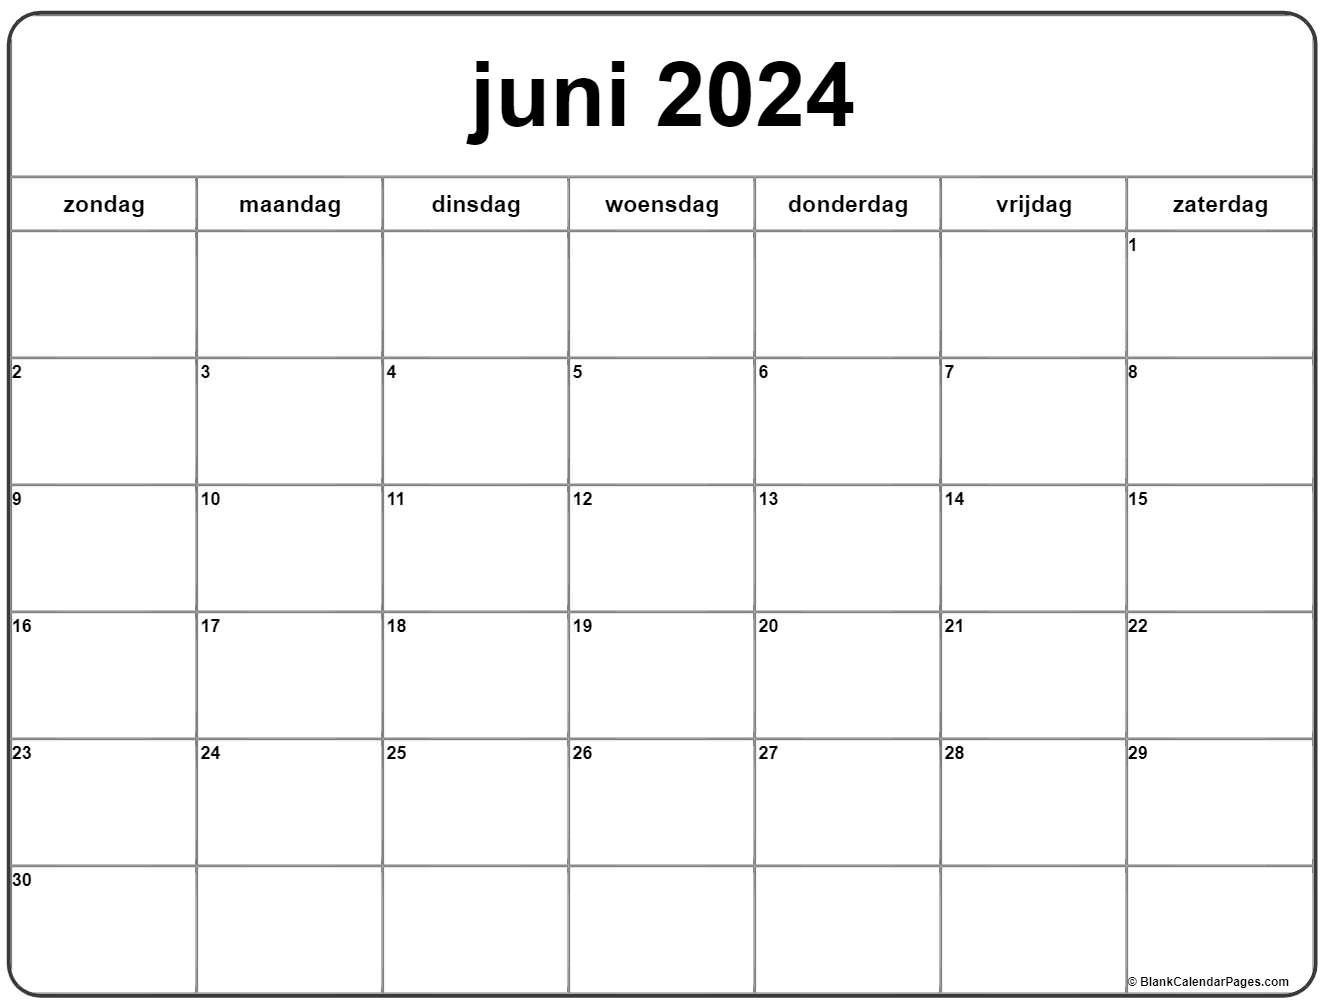 Renaissance Bijproduct overhandigen juni 2022 kalender Nederlandse | Kalender juni